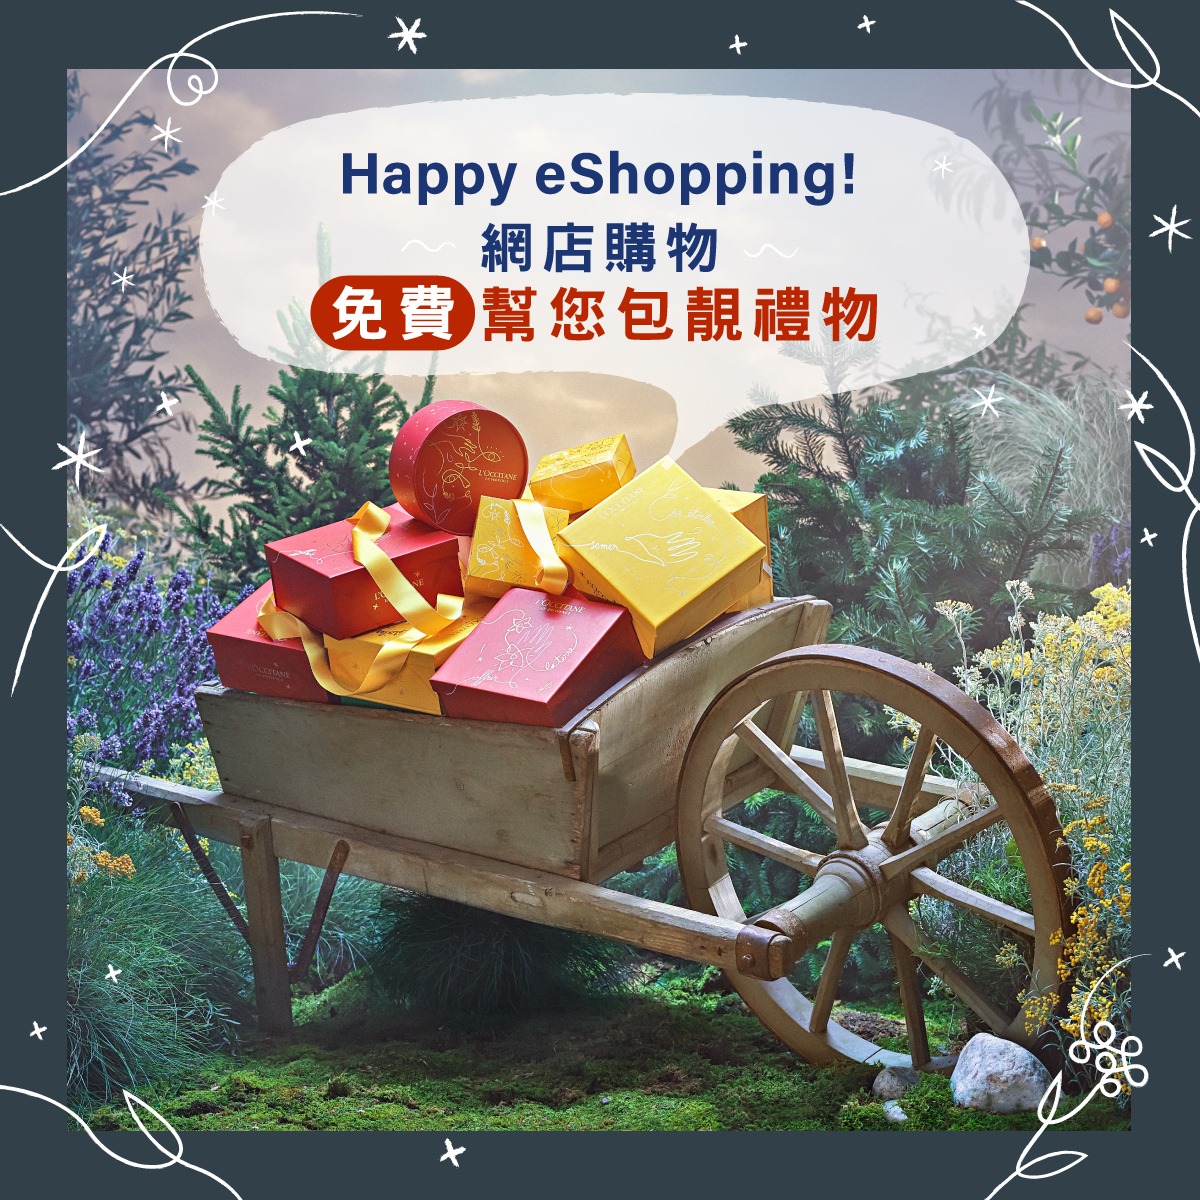 【Happy eShopping! 免費幫您包禮物】